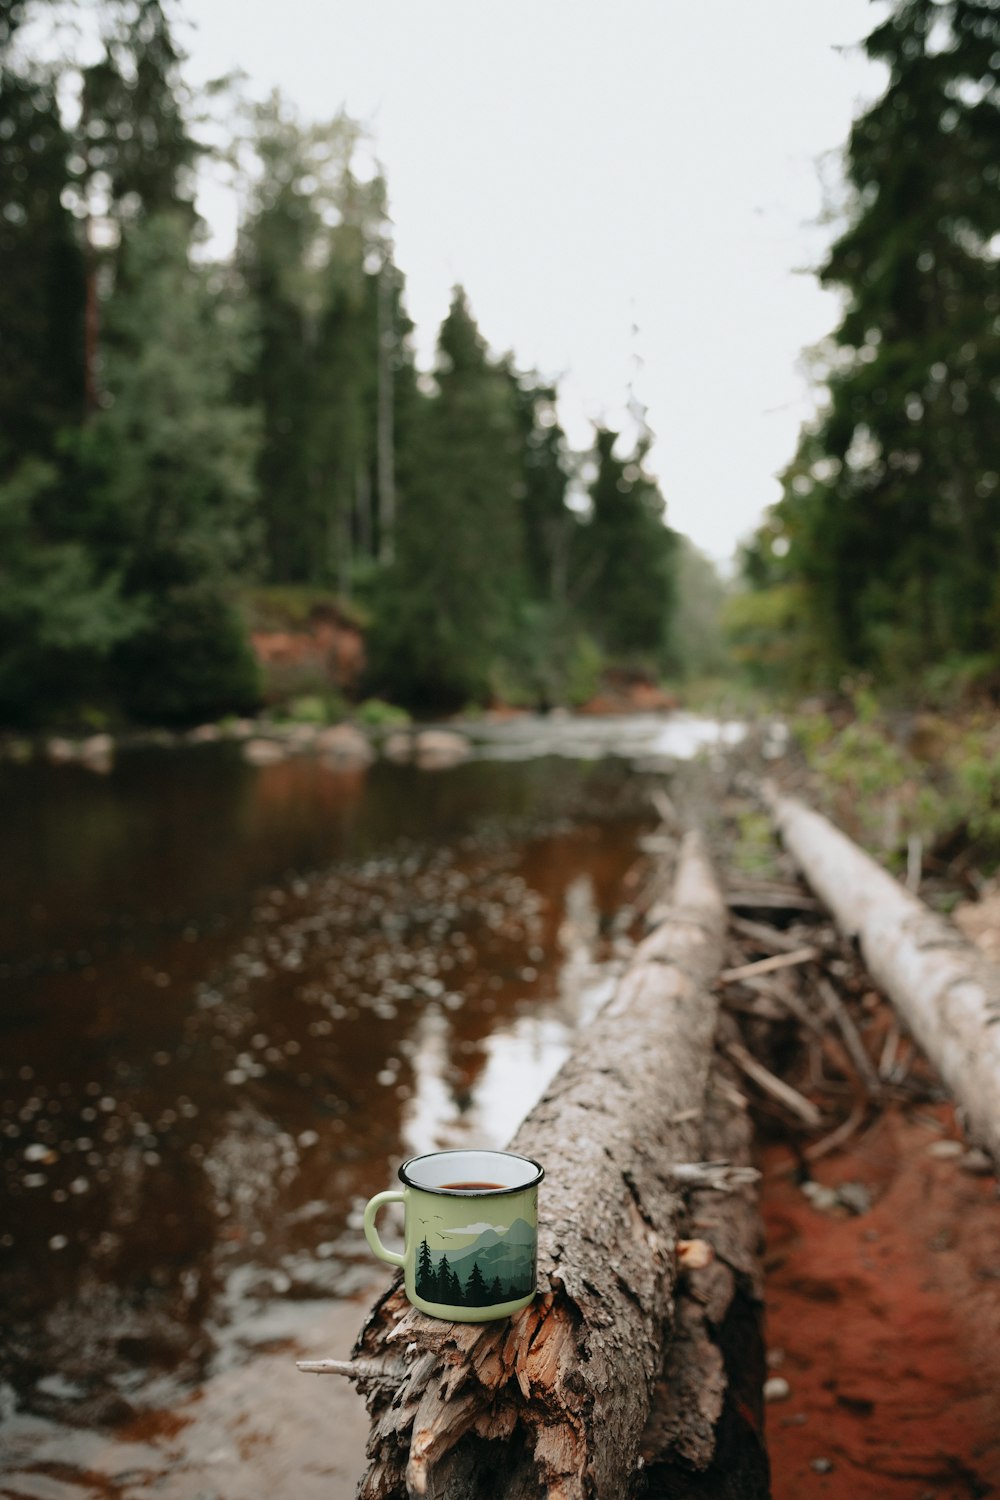 white and green ceramic mug on brown wooden log near river during daytime